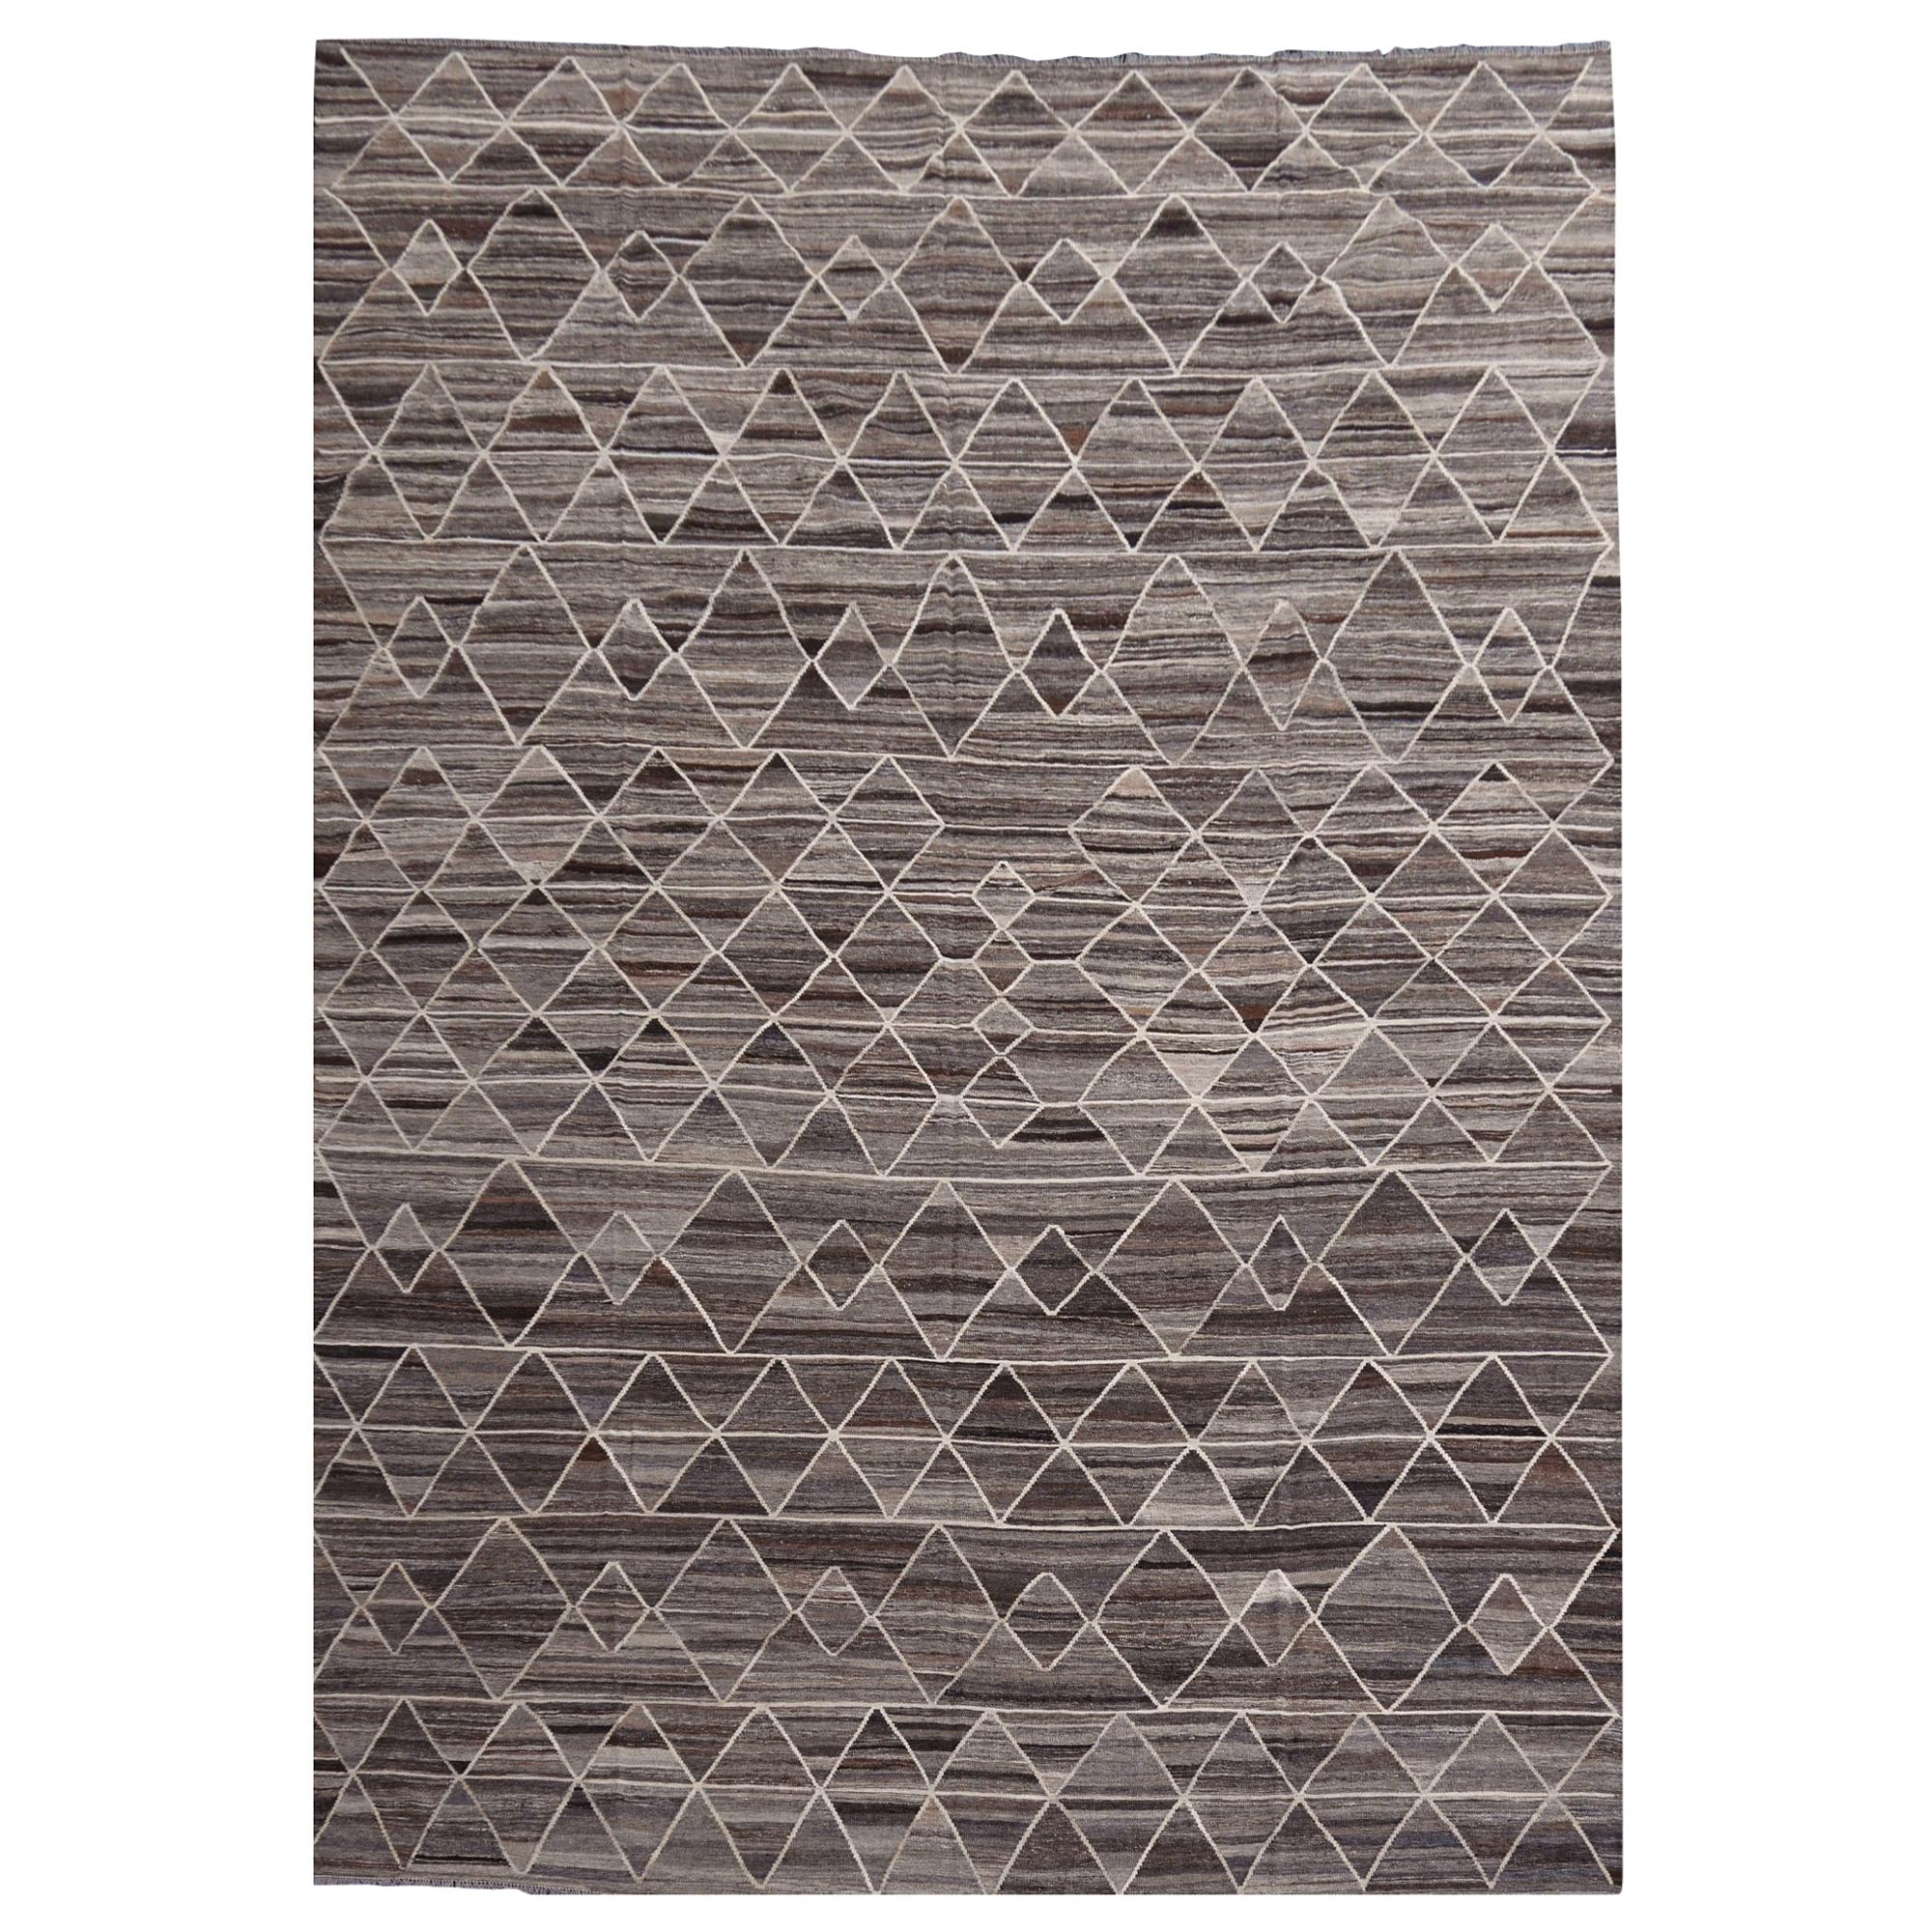 17 x 12 ft Rug Kilim Modern Design Neutrals Gray Brown Scandinavian Style Carpet